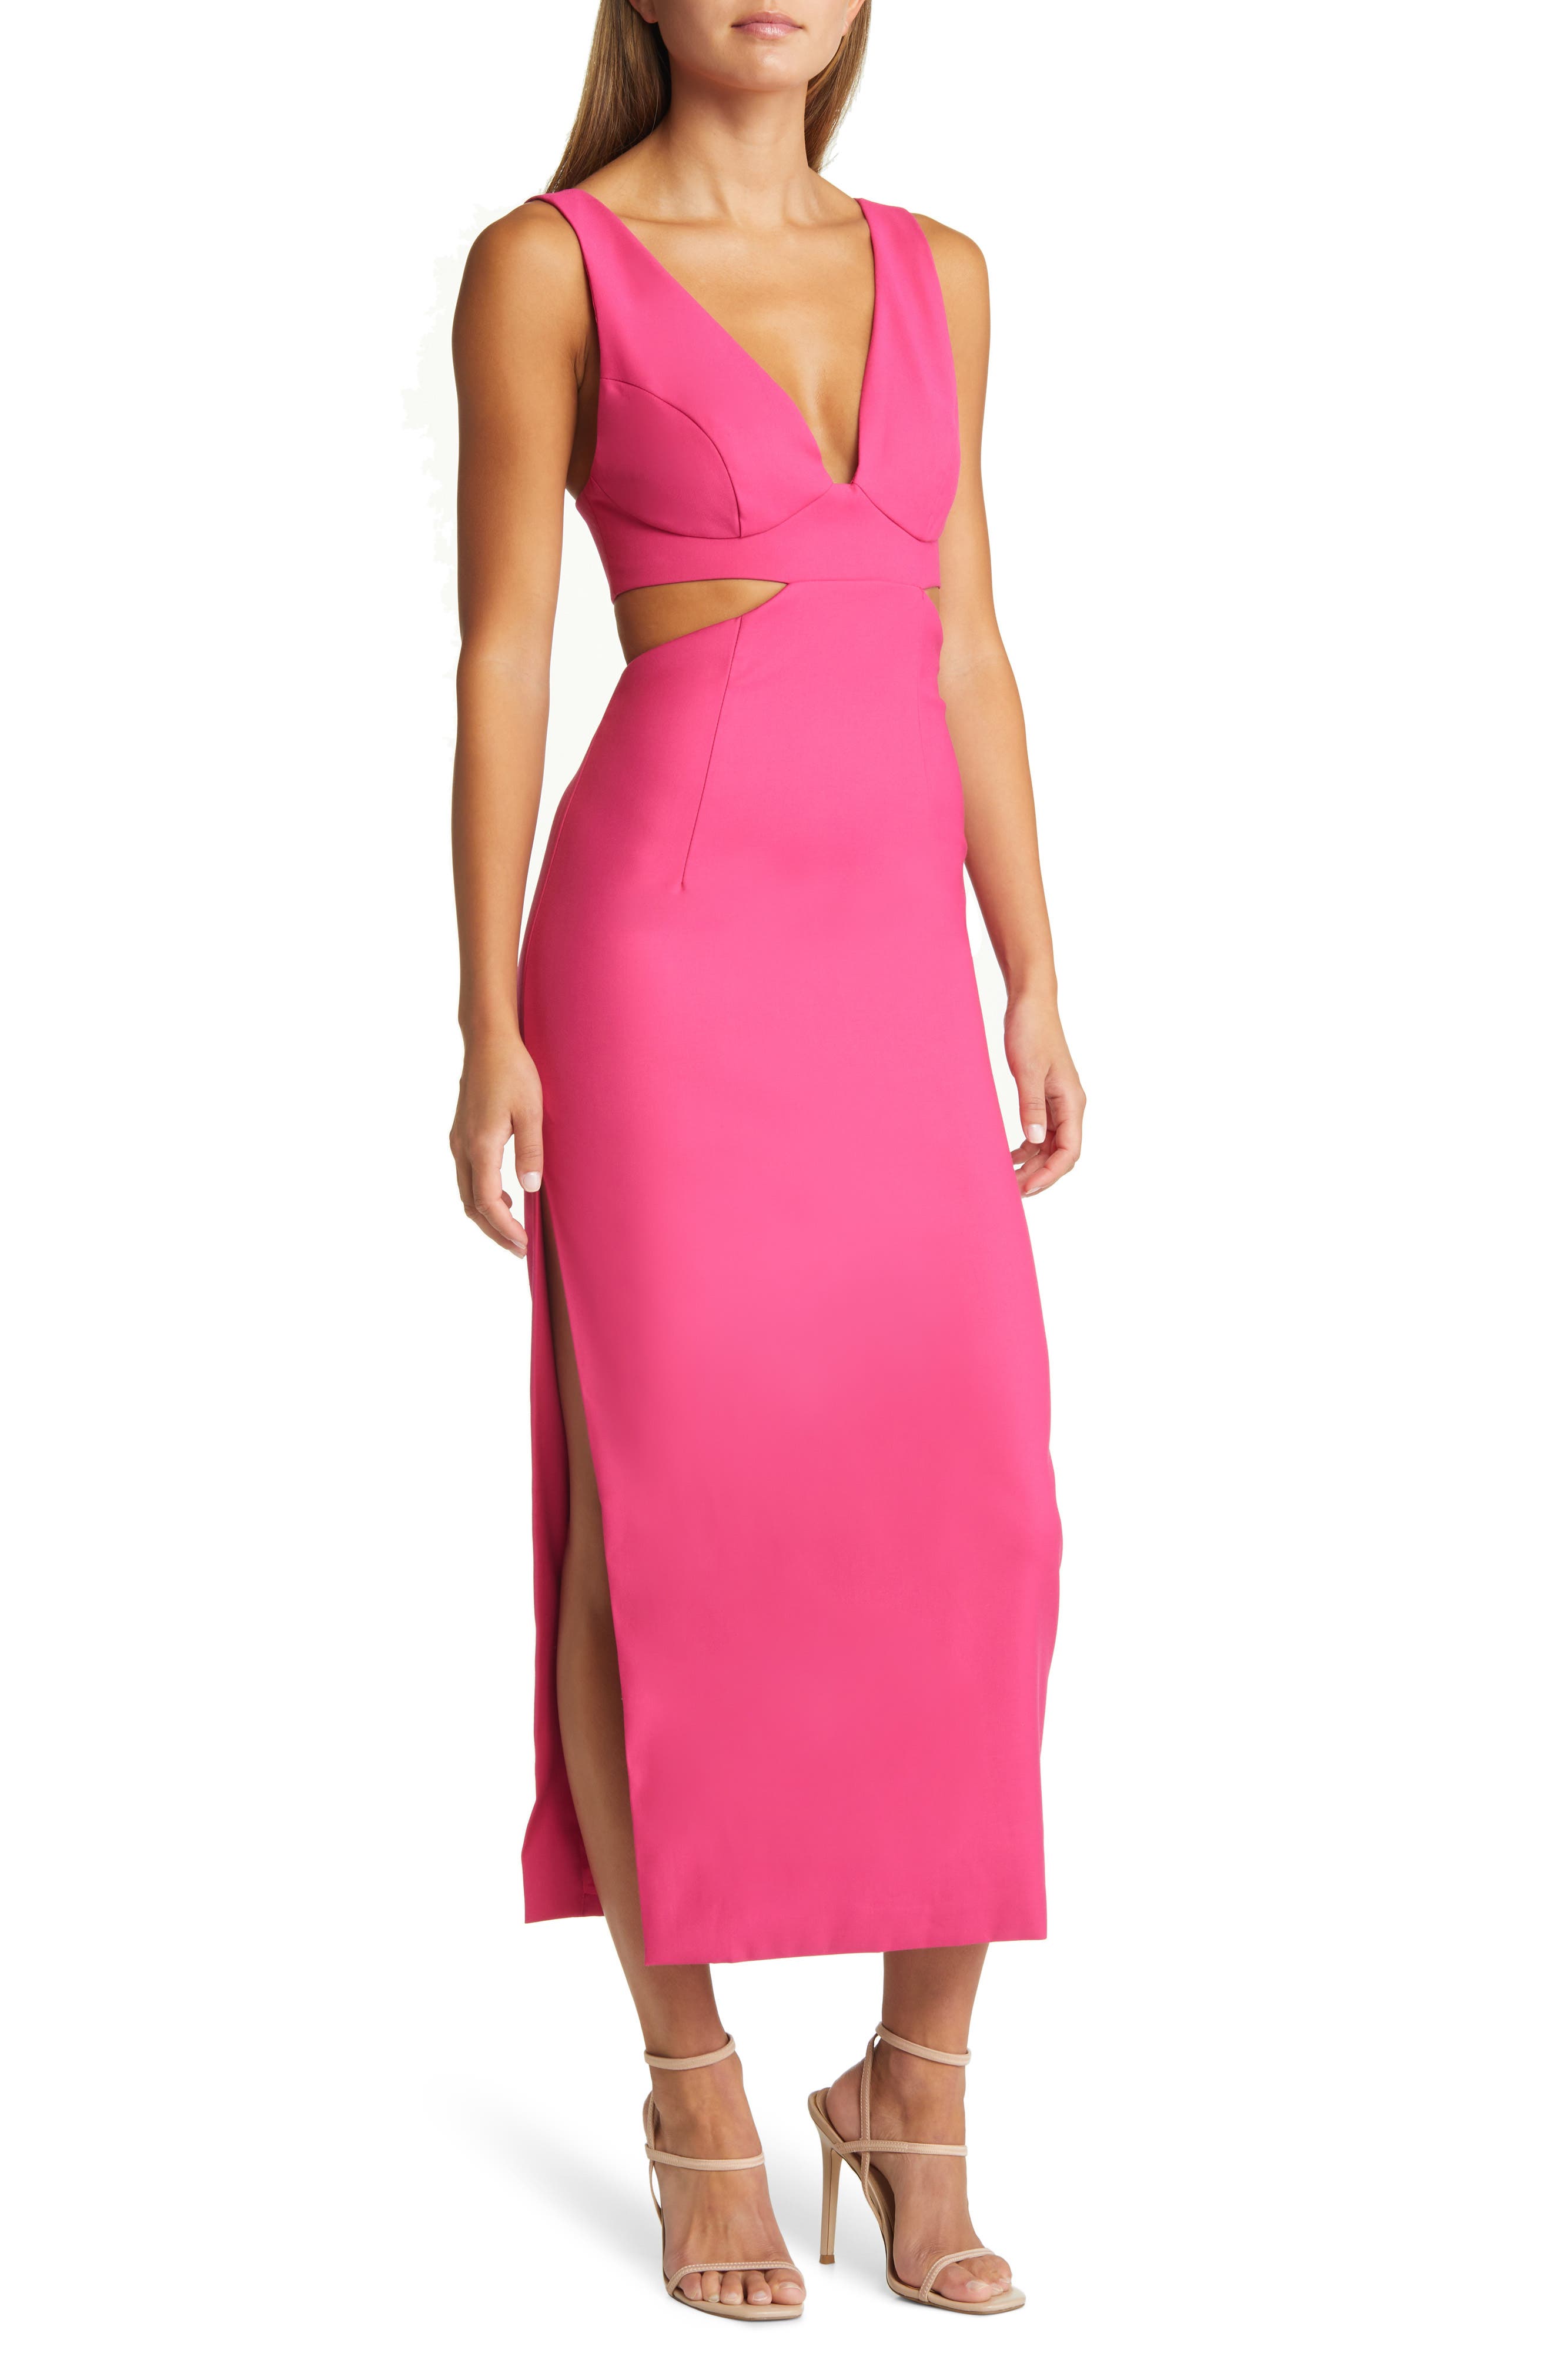 Pink Dress Lisa Scott Lee Life Size Cutout 